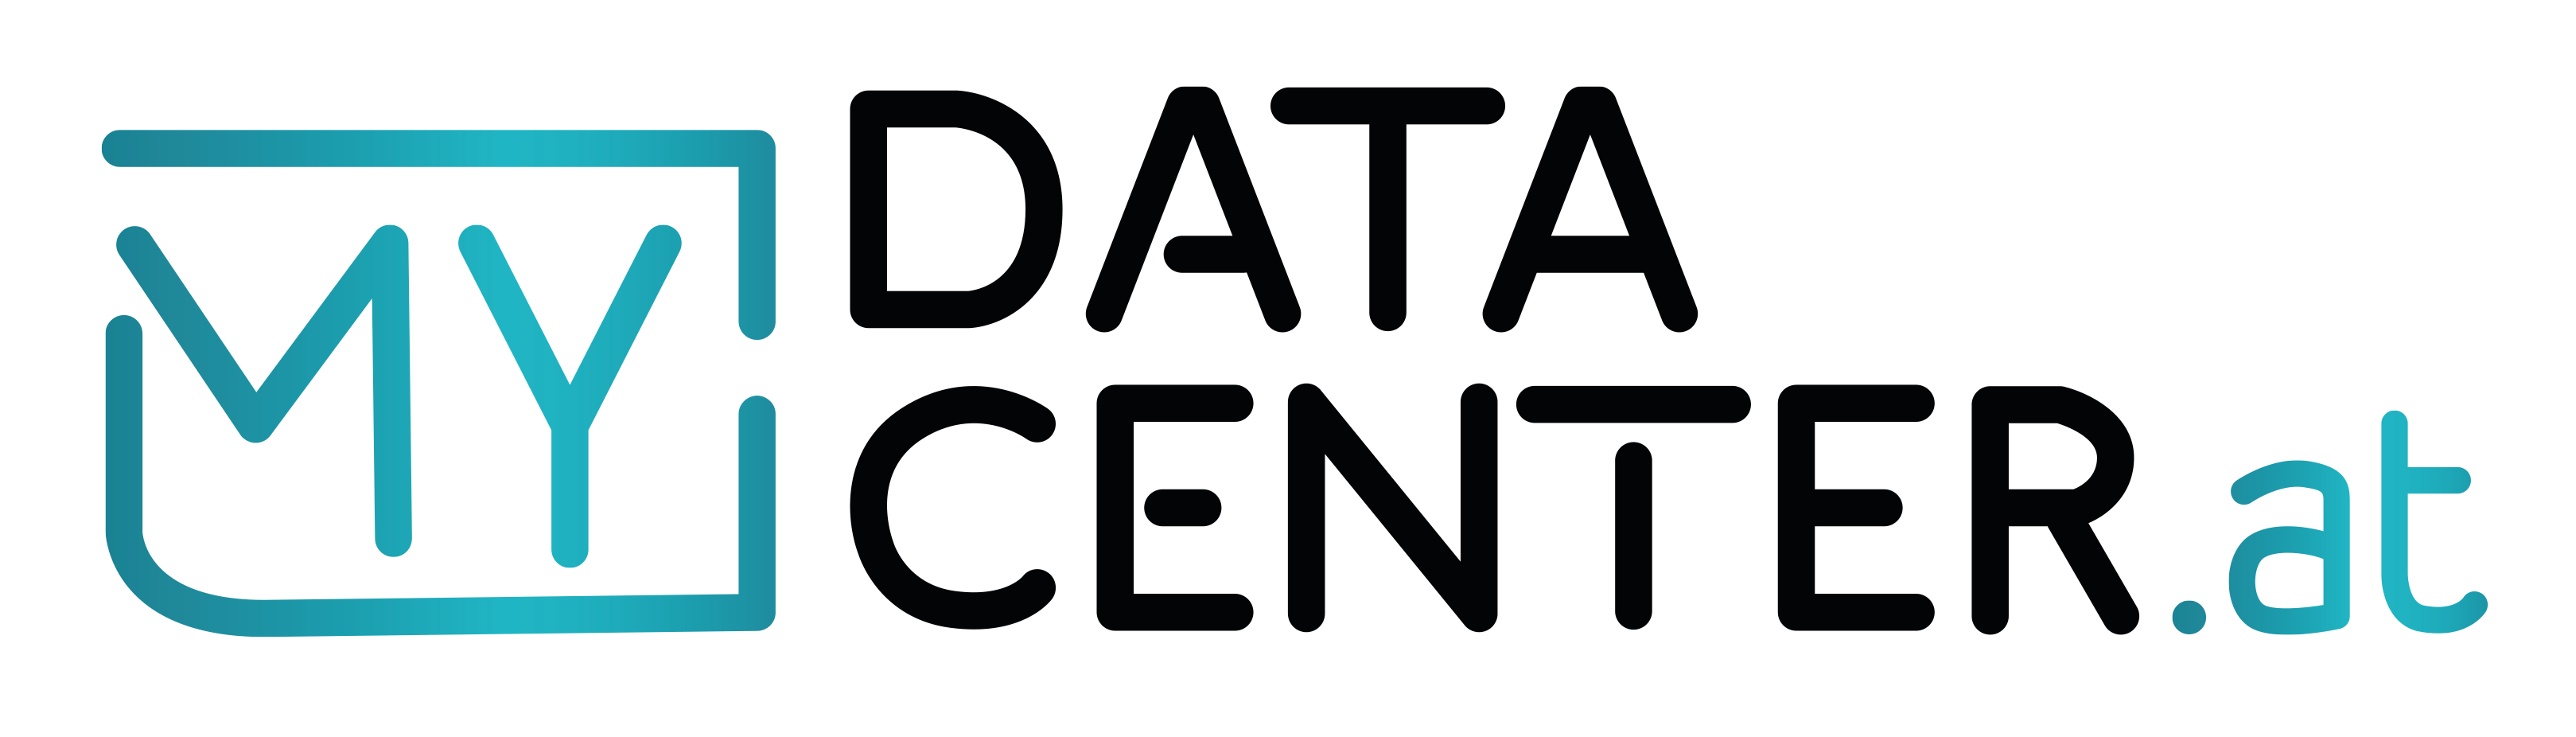 My Data Center Logo